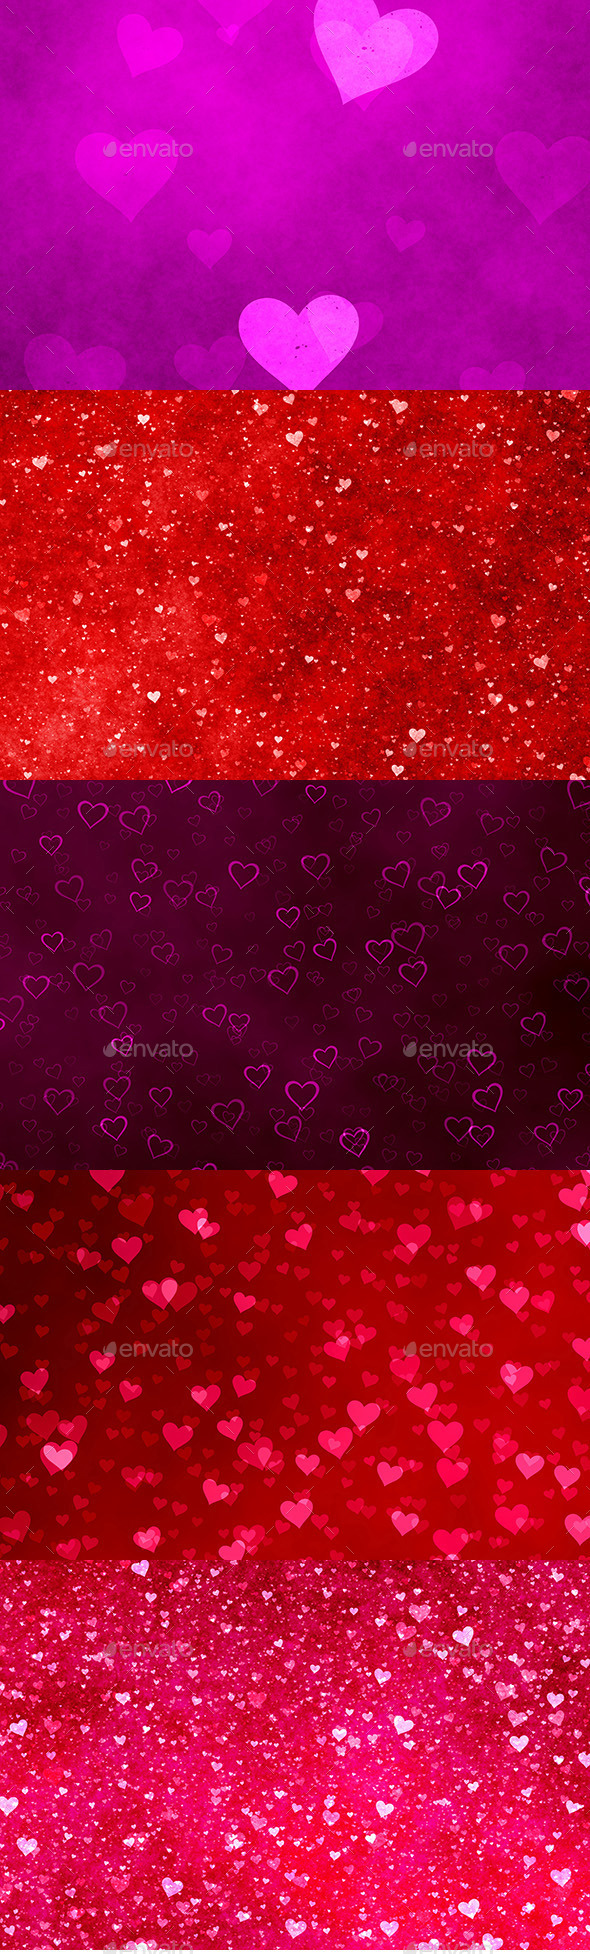 Valentine Backgrounds